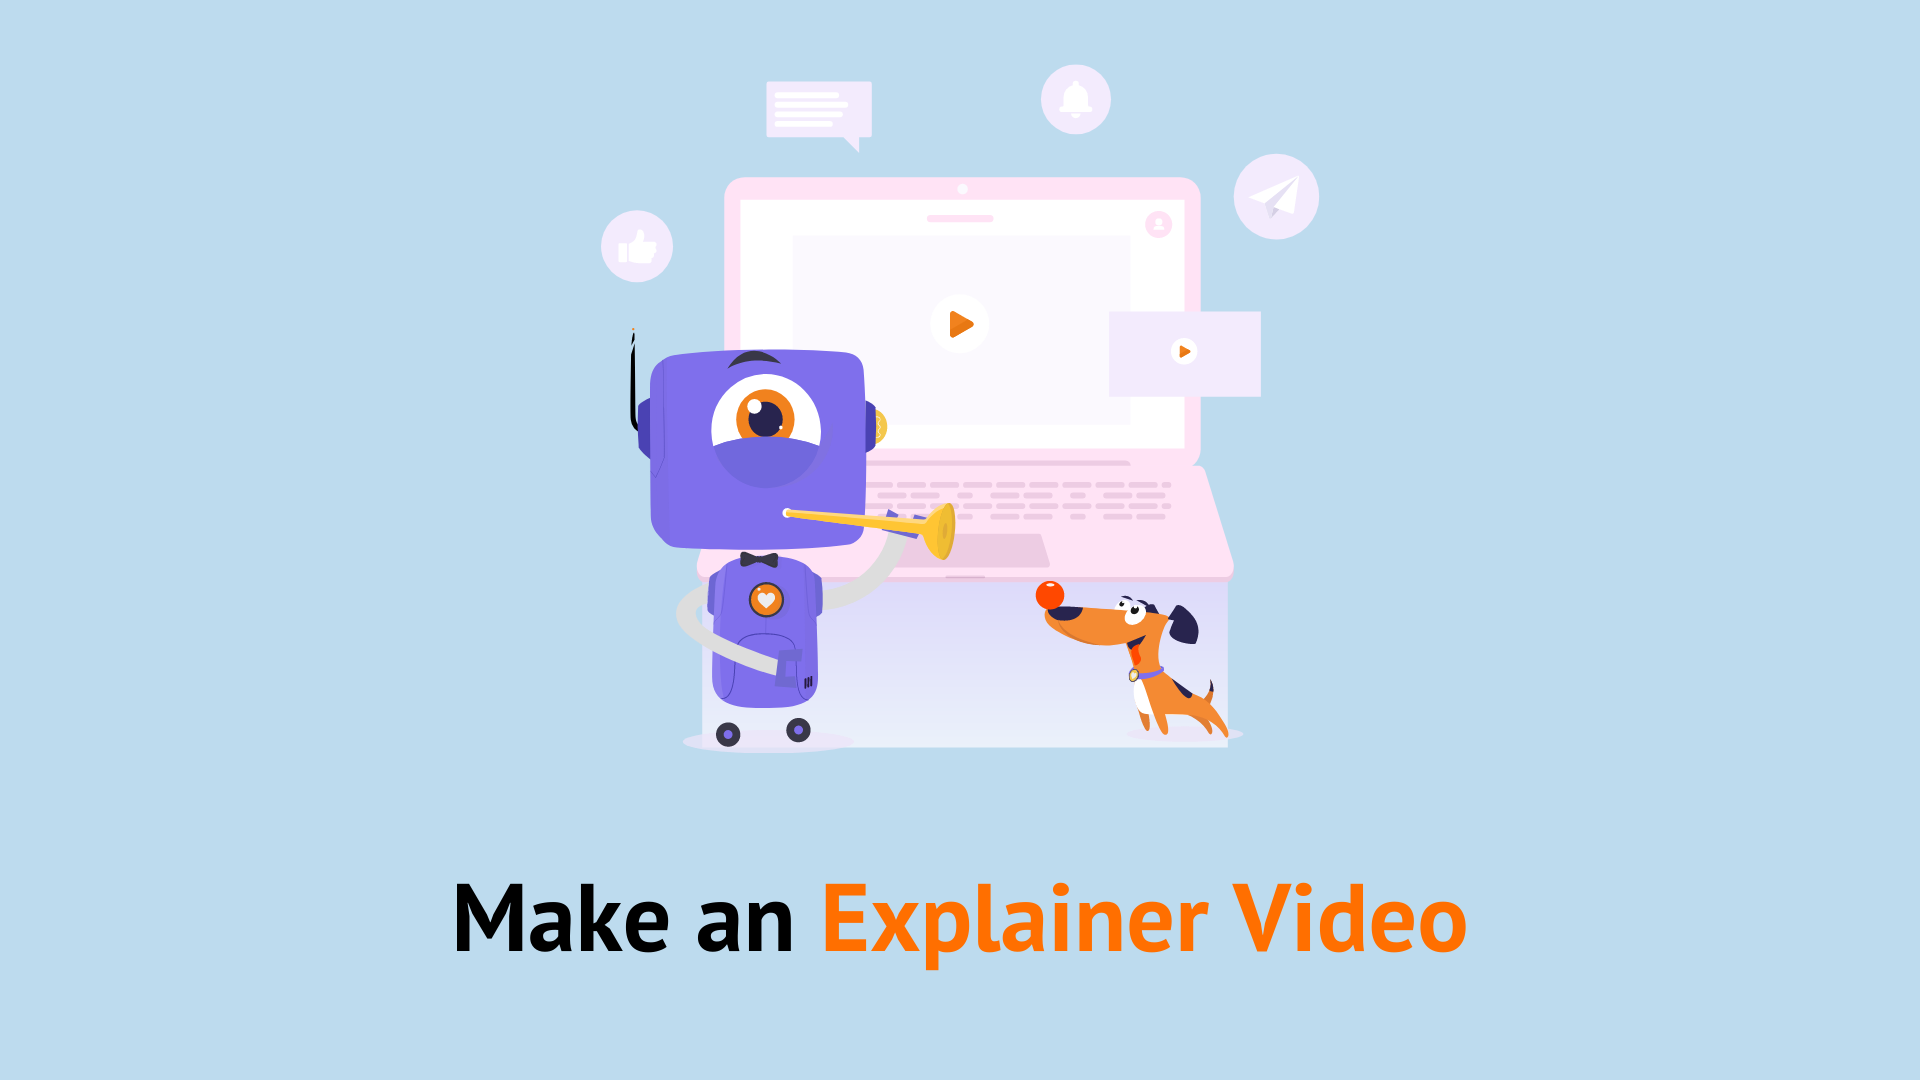 Explainer video software